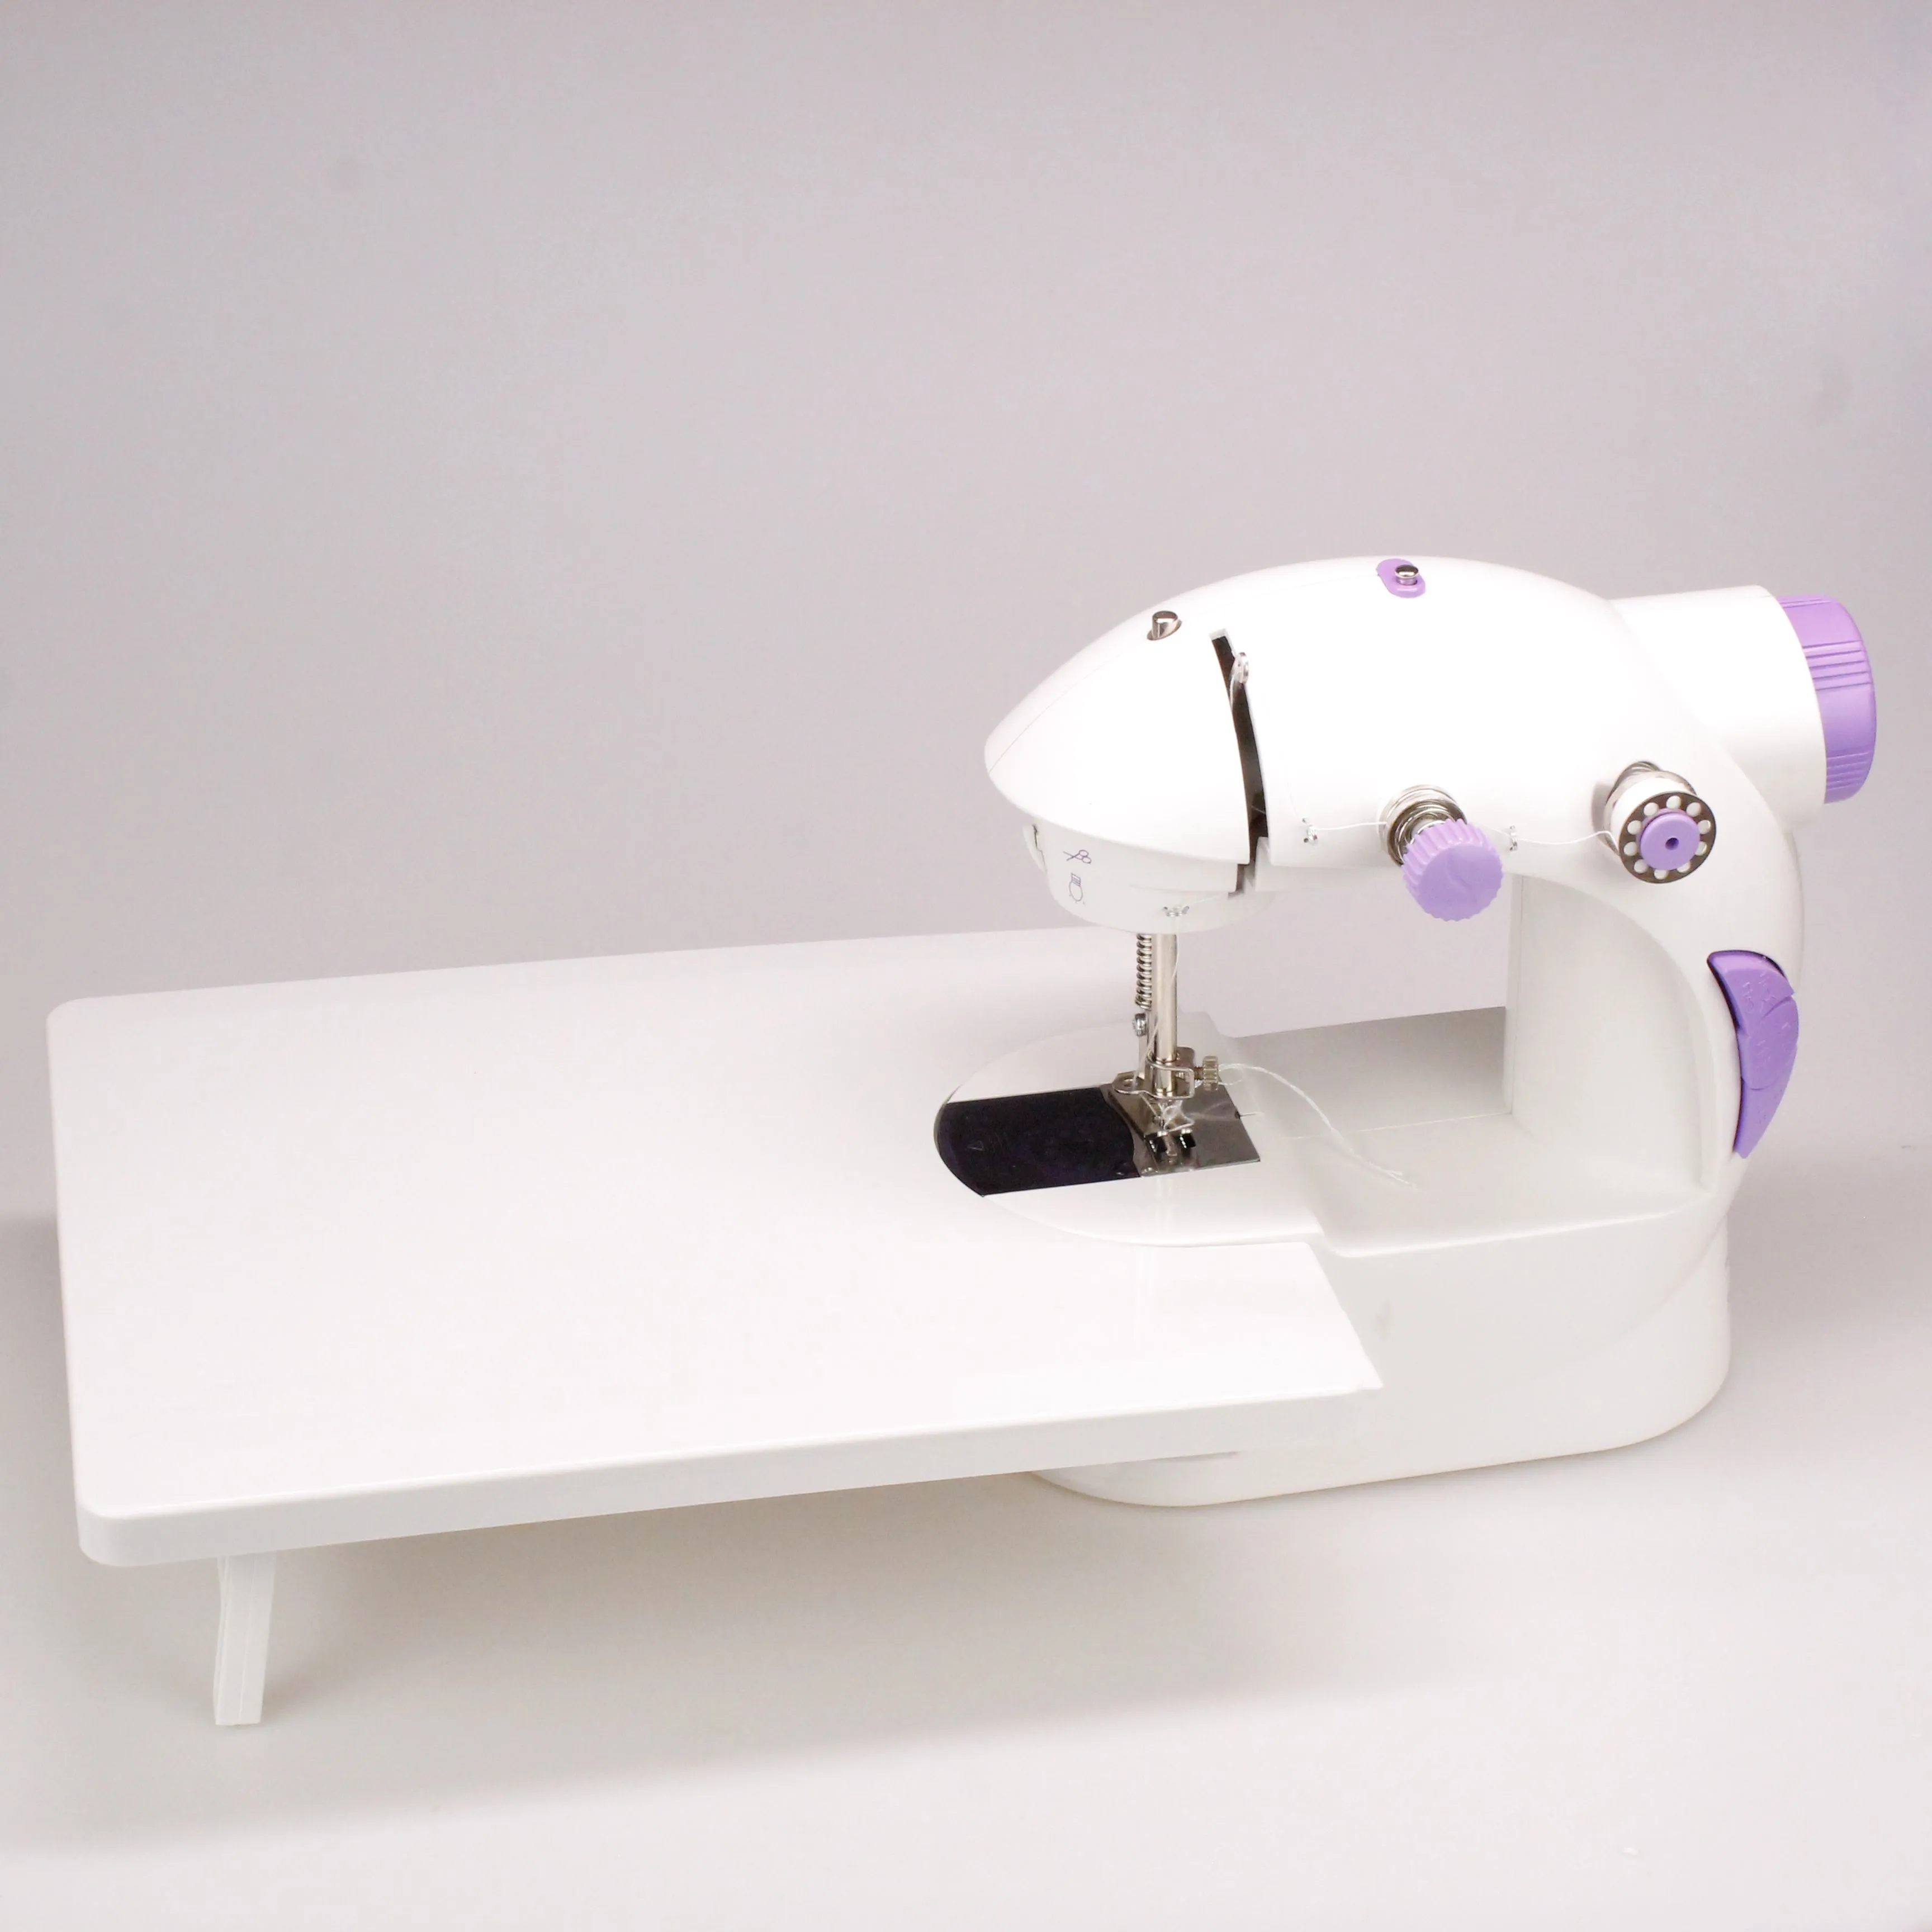 Máquina de coser práctica de JA1-1mini, tamaño mini, práctica, multifunción, 201